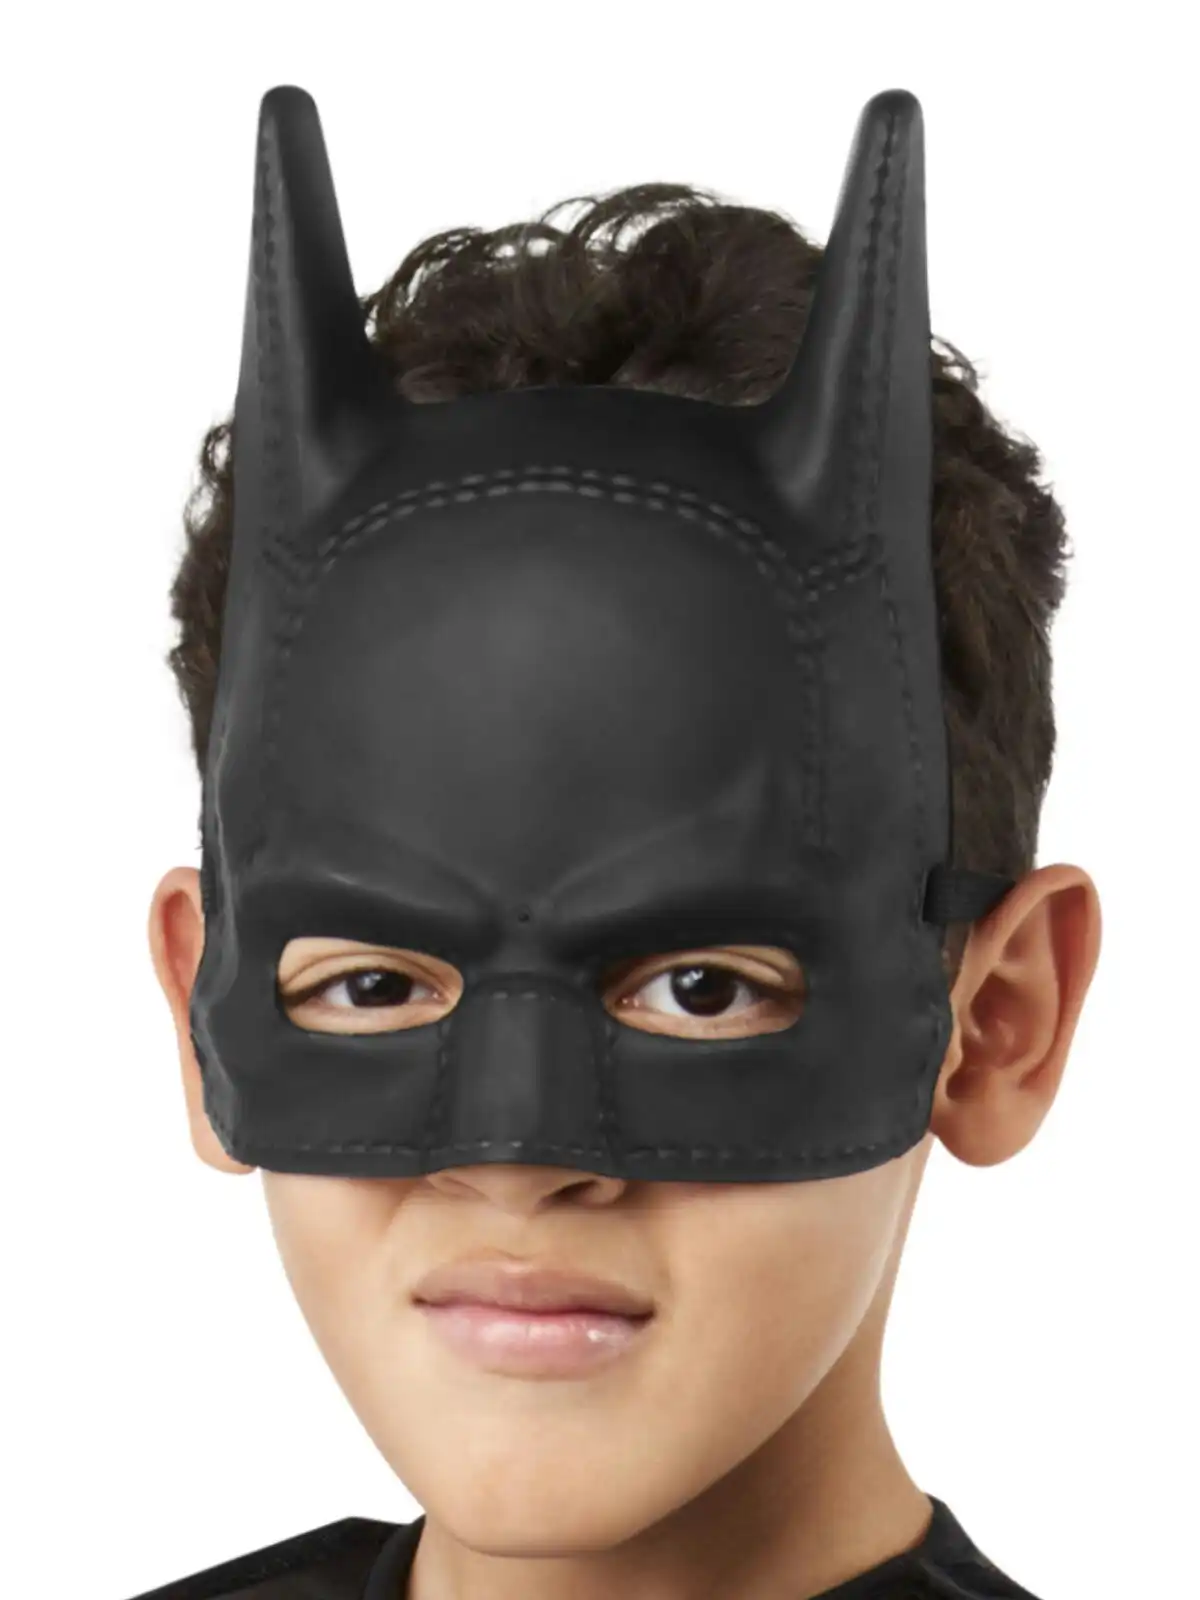 DC Comics The Batman 1/2 Mask Superhero/Halloween Dress Up Kids/Boys Costume